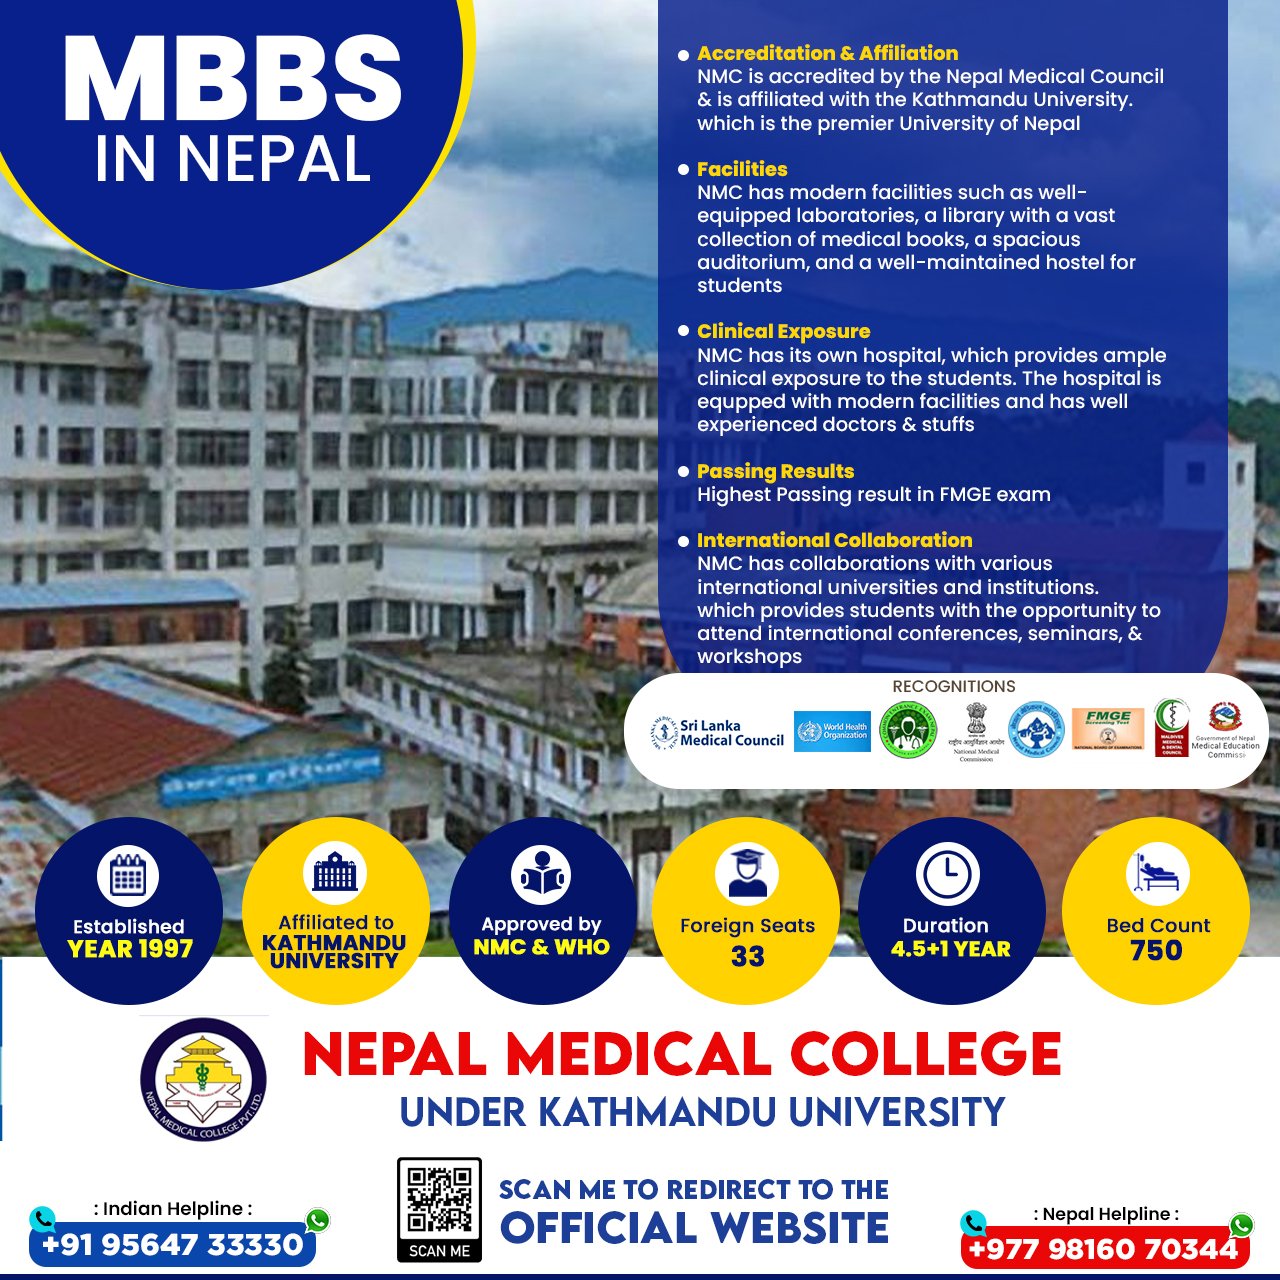 mbbs-in-nepal-at-nepal-medical-college-under-kathmandu-university